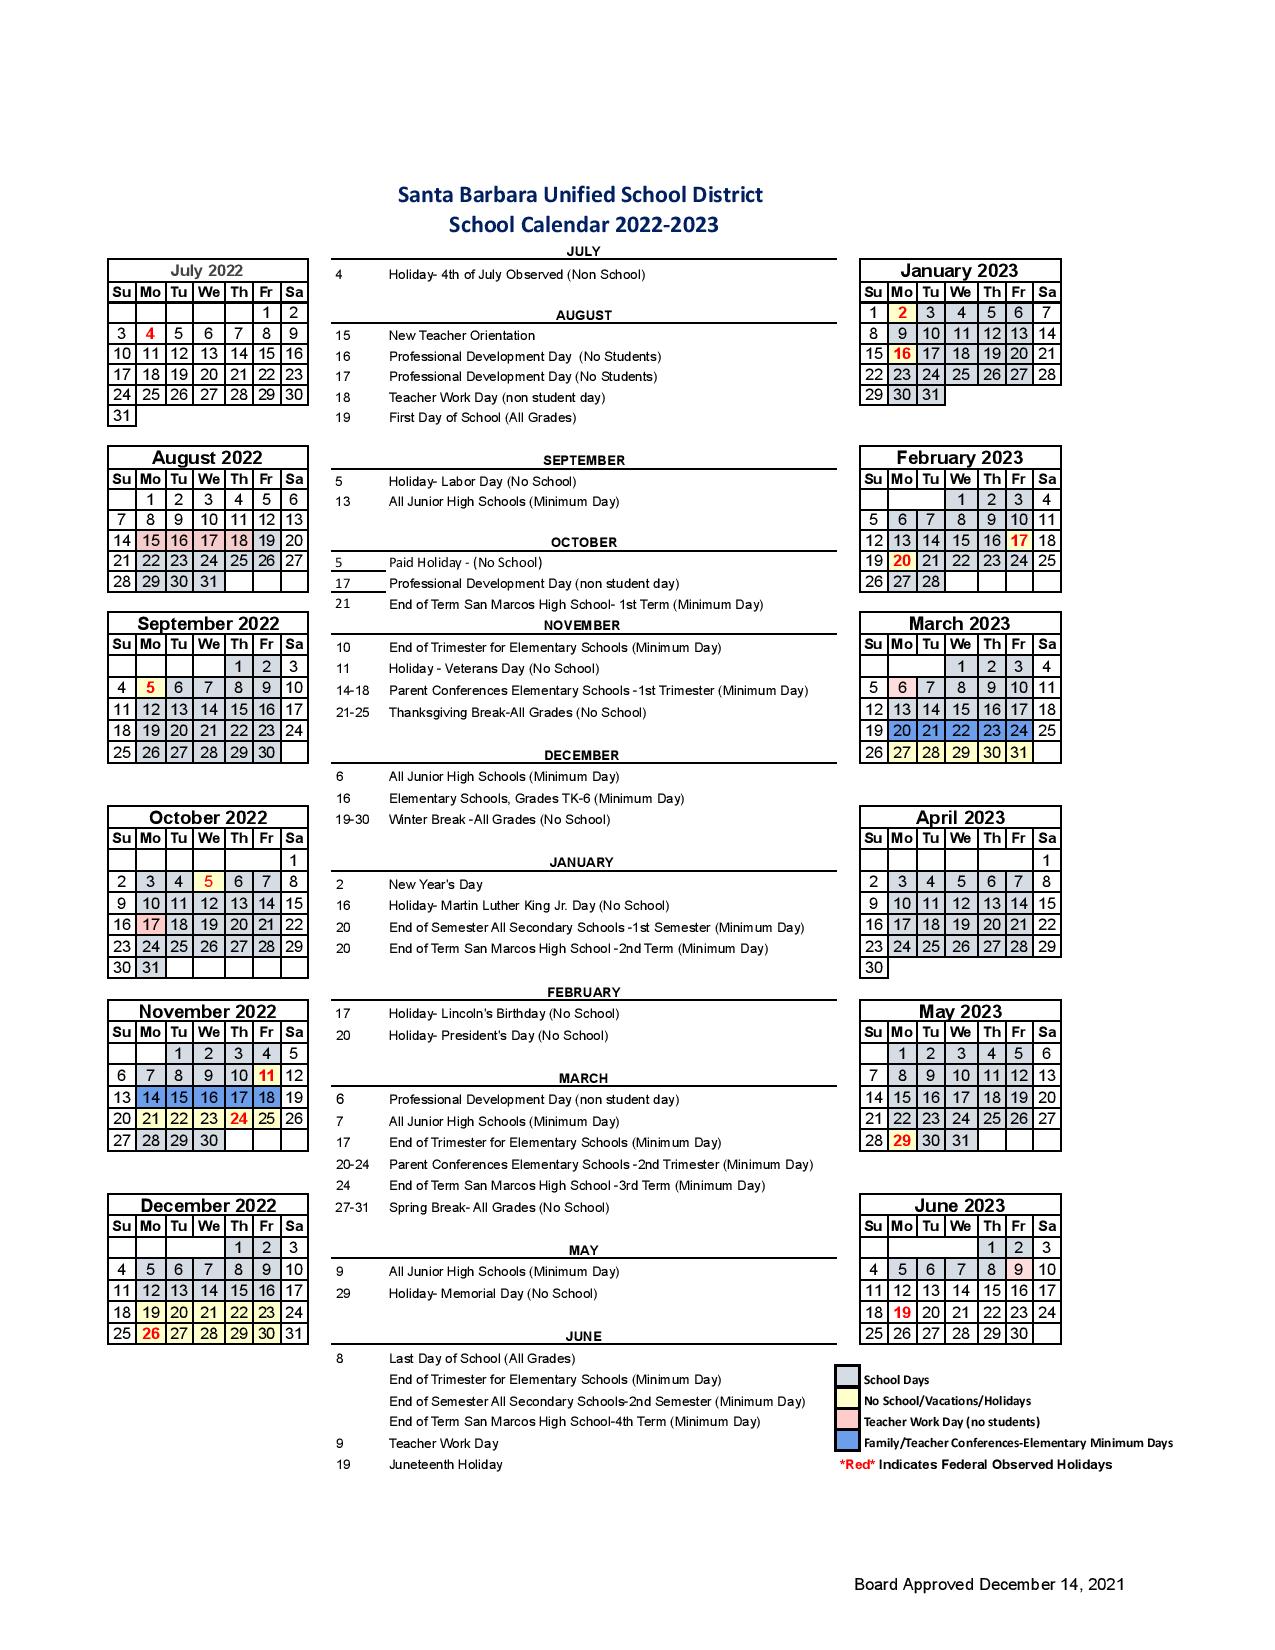 Santa Barbara Unified School District Calendar 2022 2023